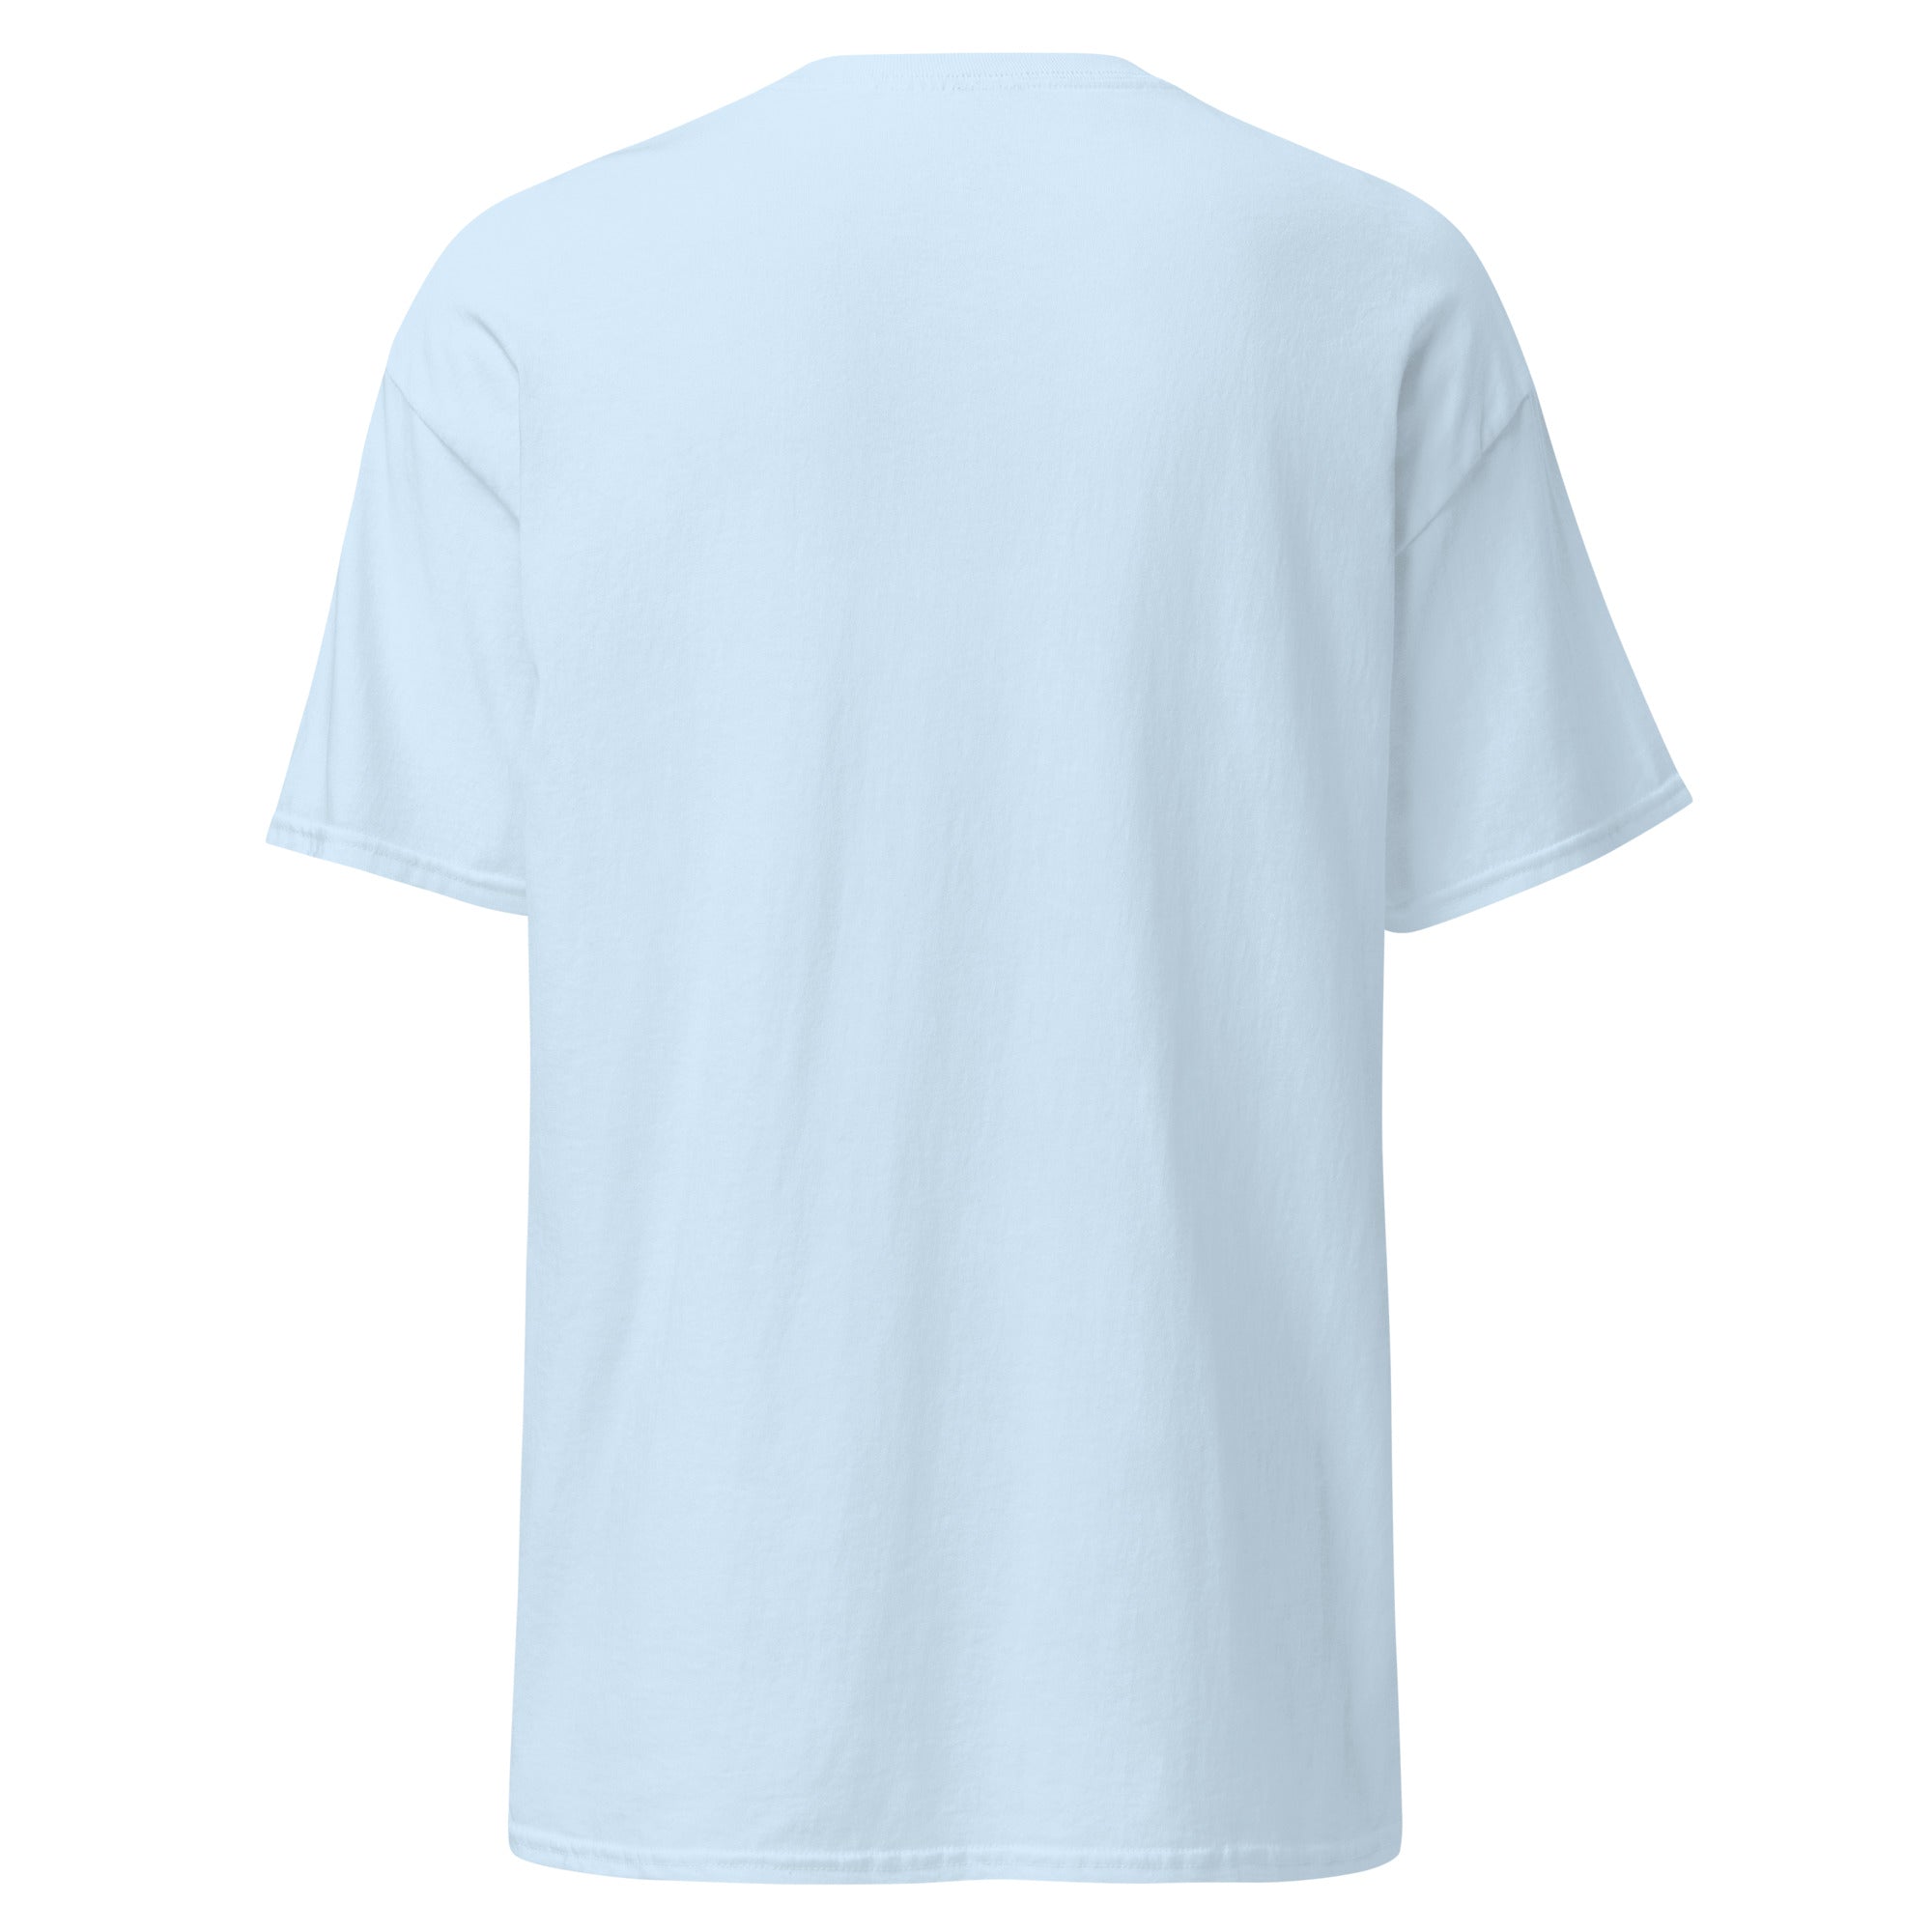 Autism Mens Custom T Shirt